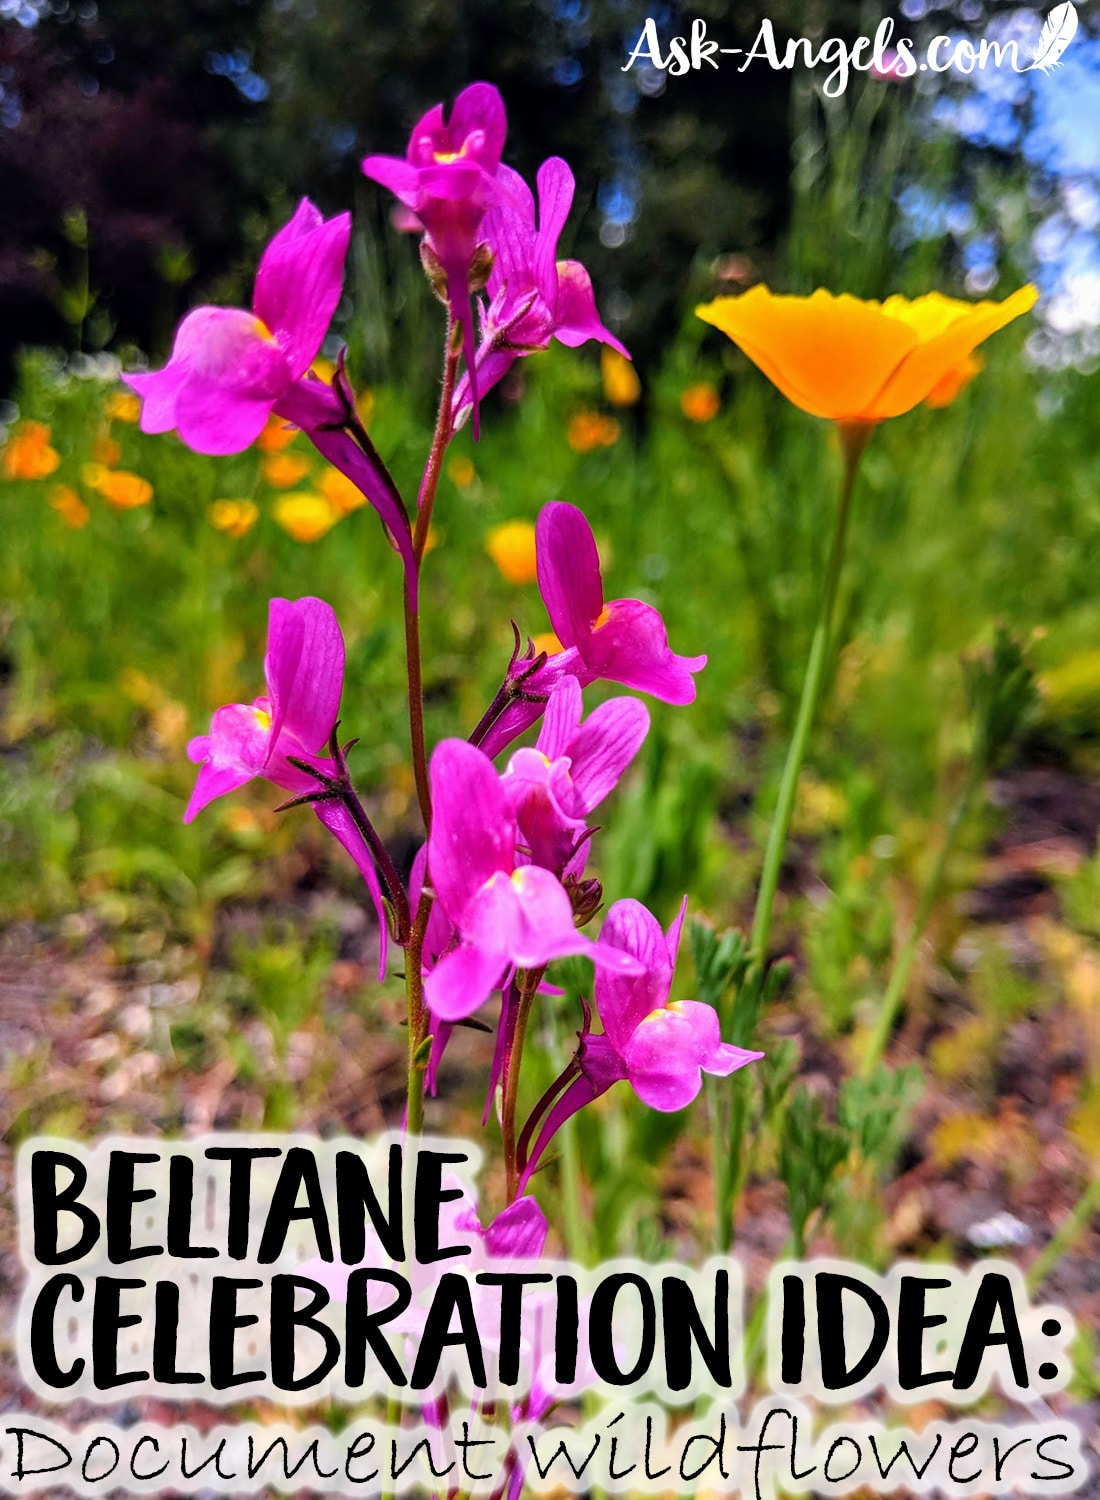 Beltane Celebration Idea: Document Wildflowers